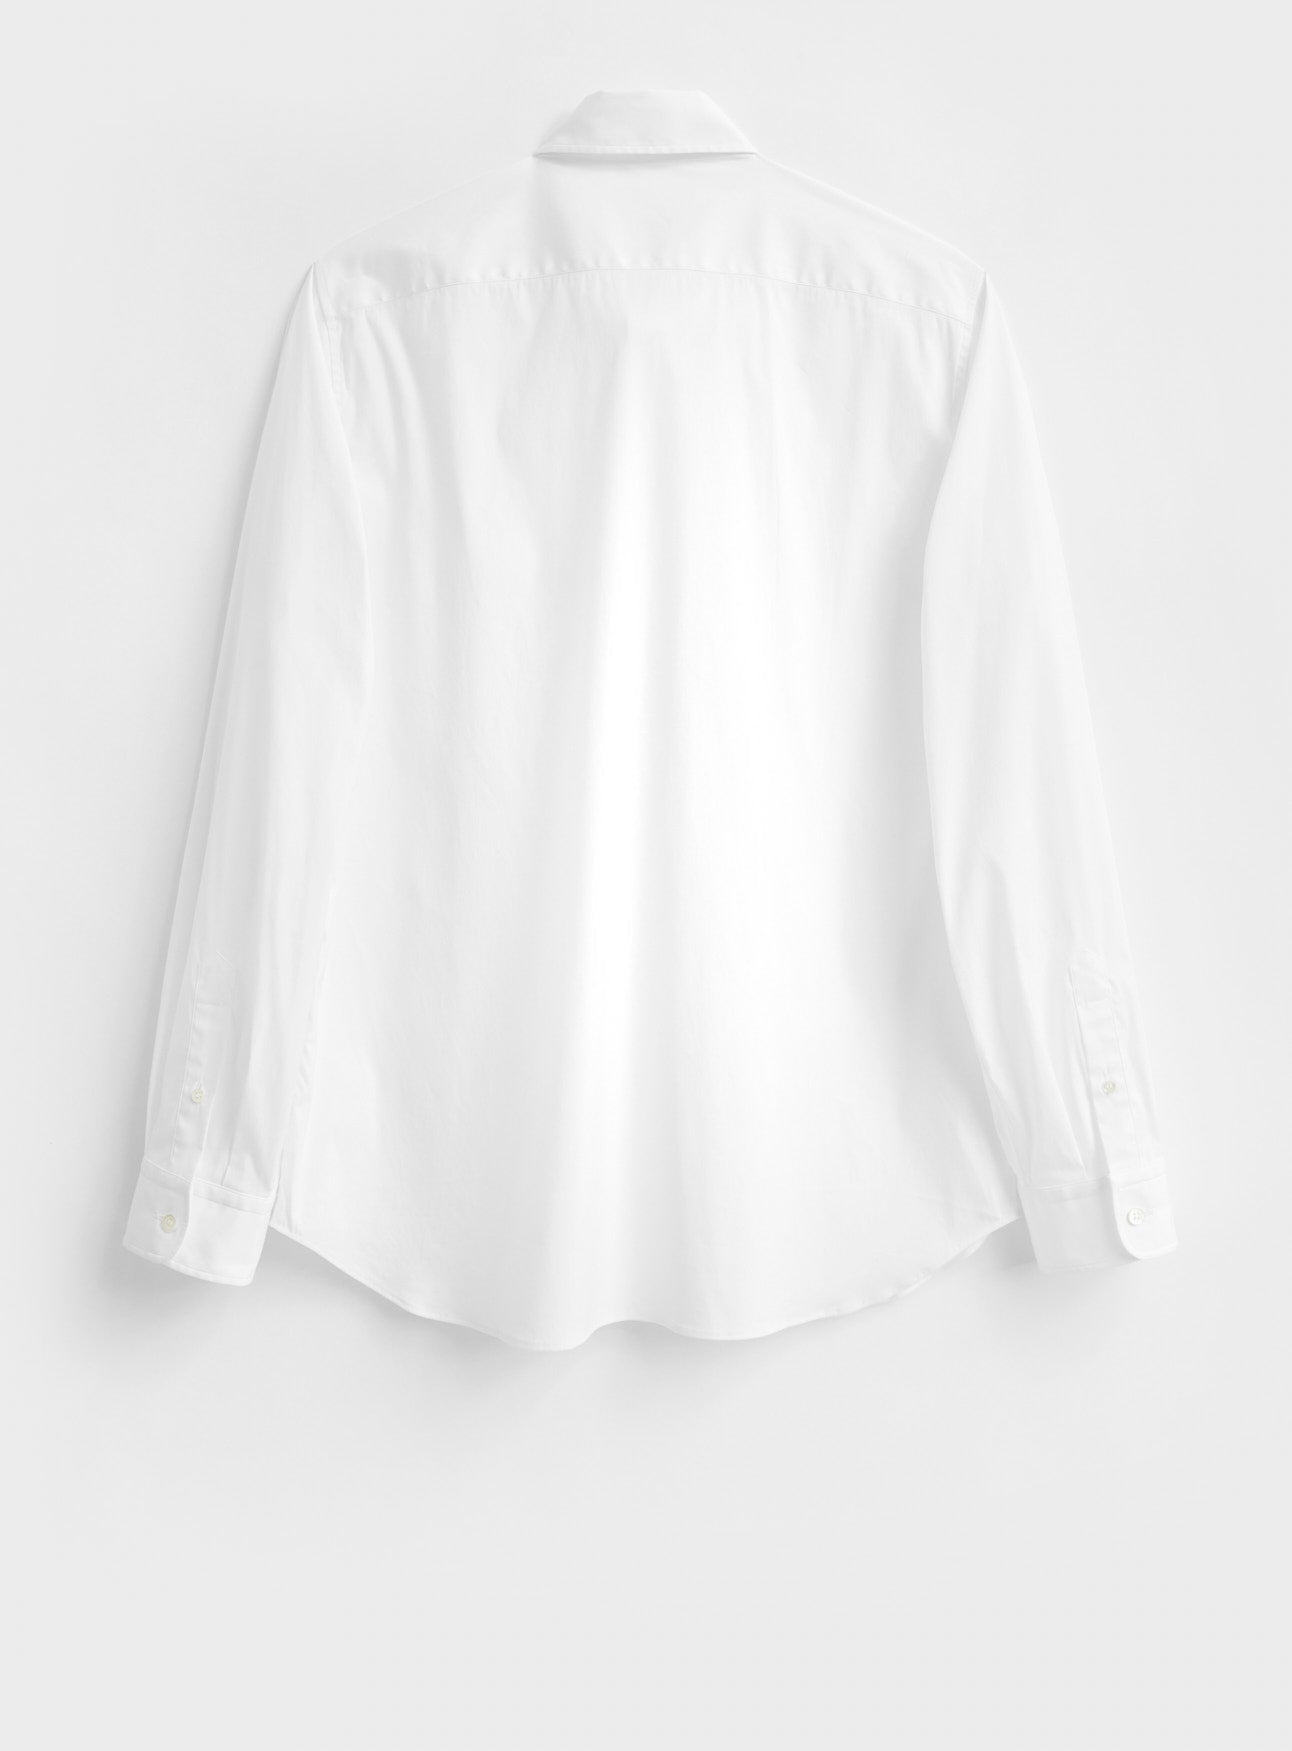 long sleeve white shirt